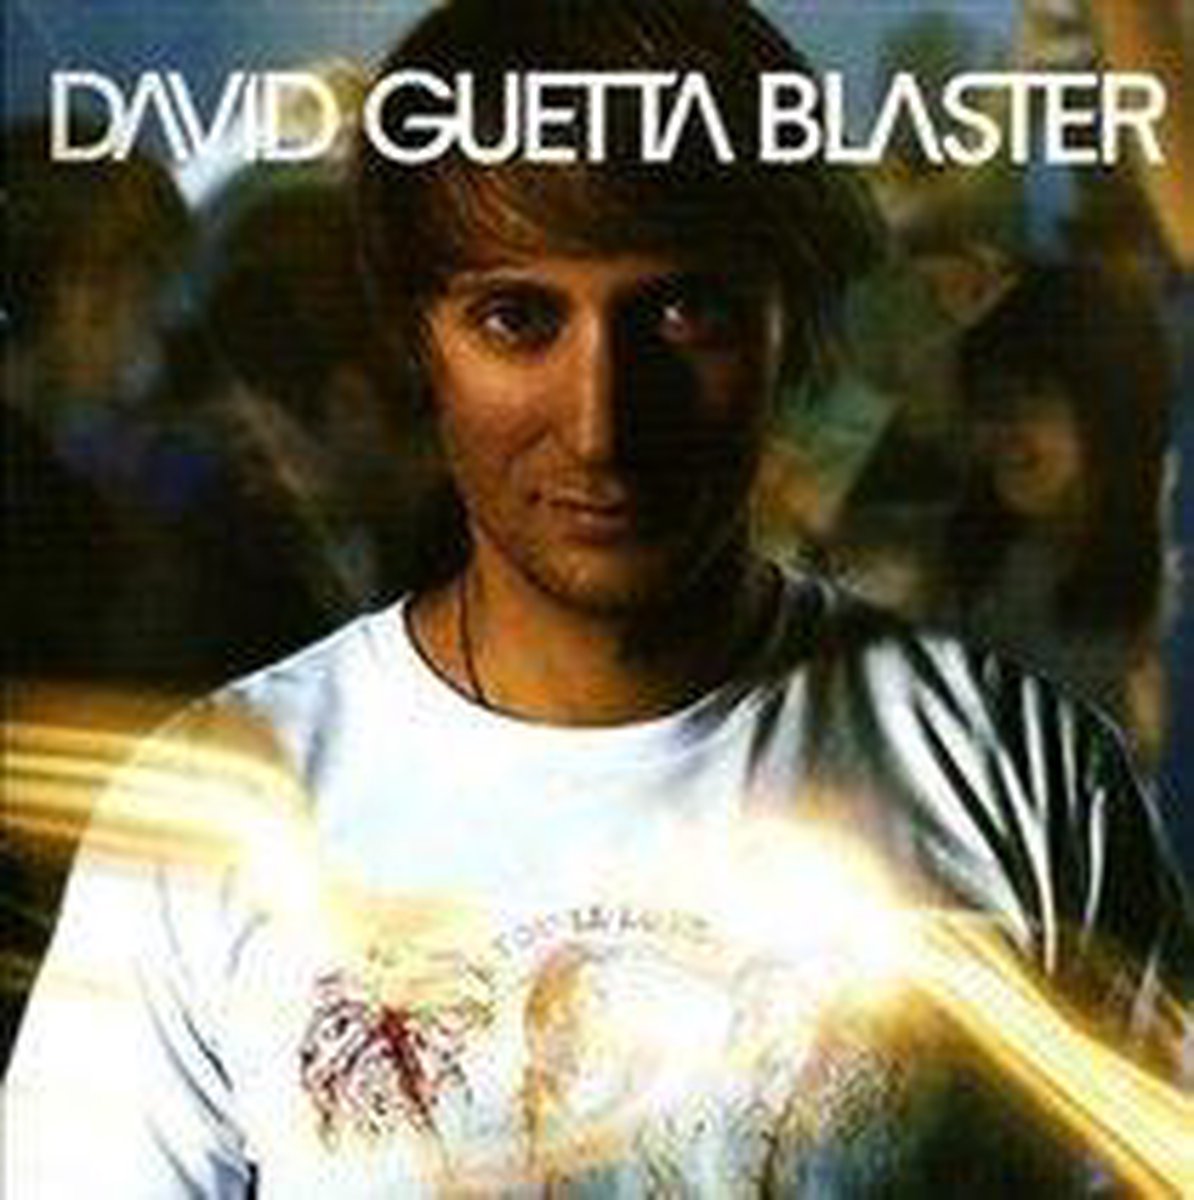 Guetta Blaster - David Guetta